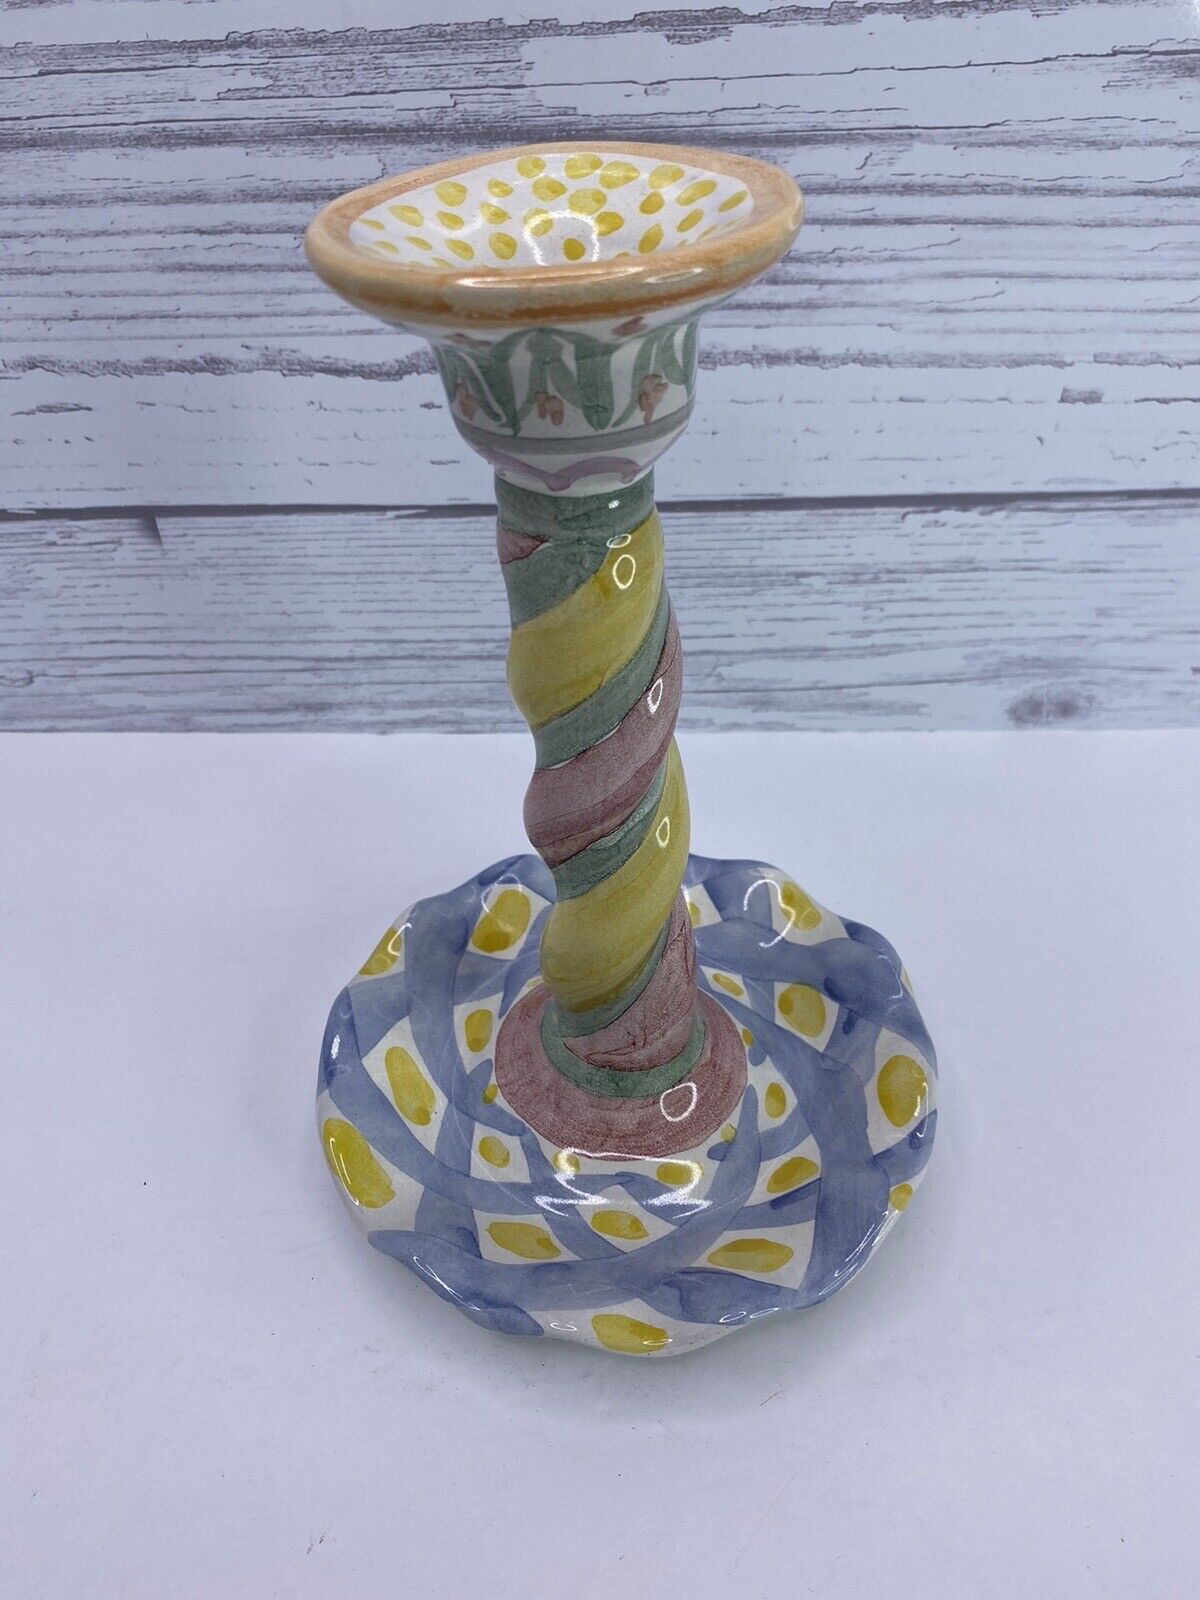 Mackenzie Childs Tall Twisted Festive Floral Design Candle Stick Holder 1993 VTG